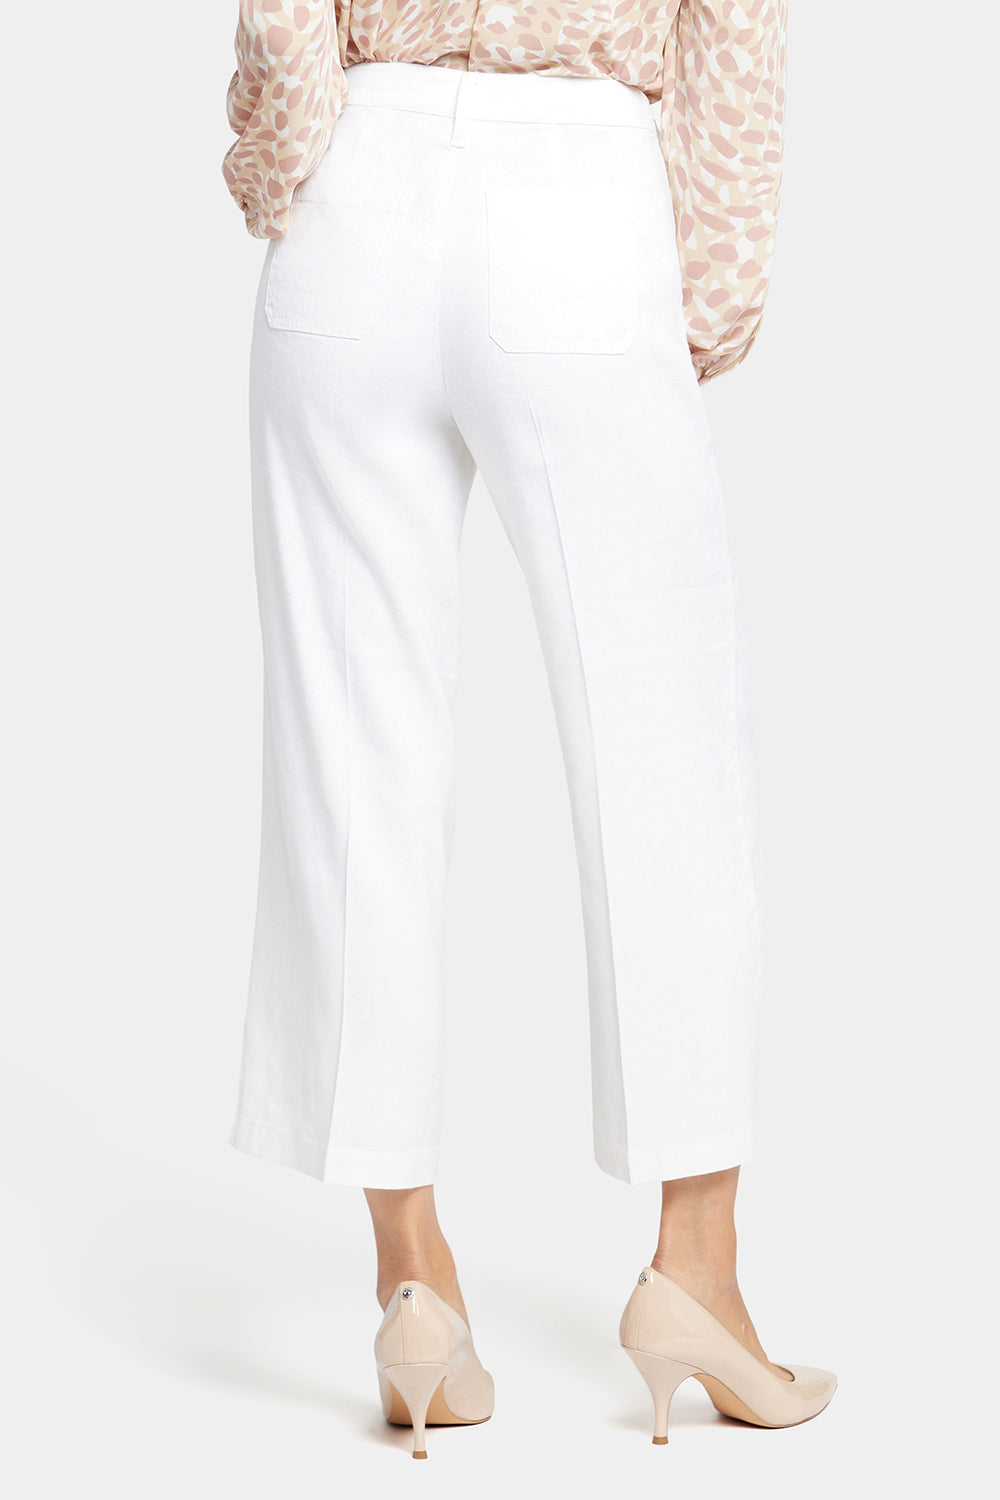 WMNS Relaxed Waistband Capri Length Pants - Rounded Bottom Wrap Legs / Long  Side Slits / White